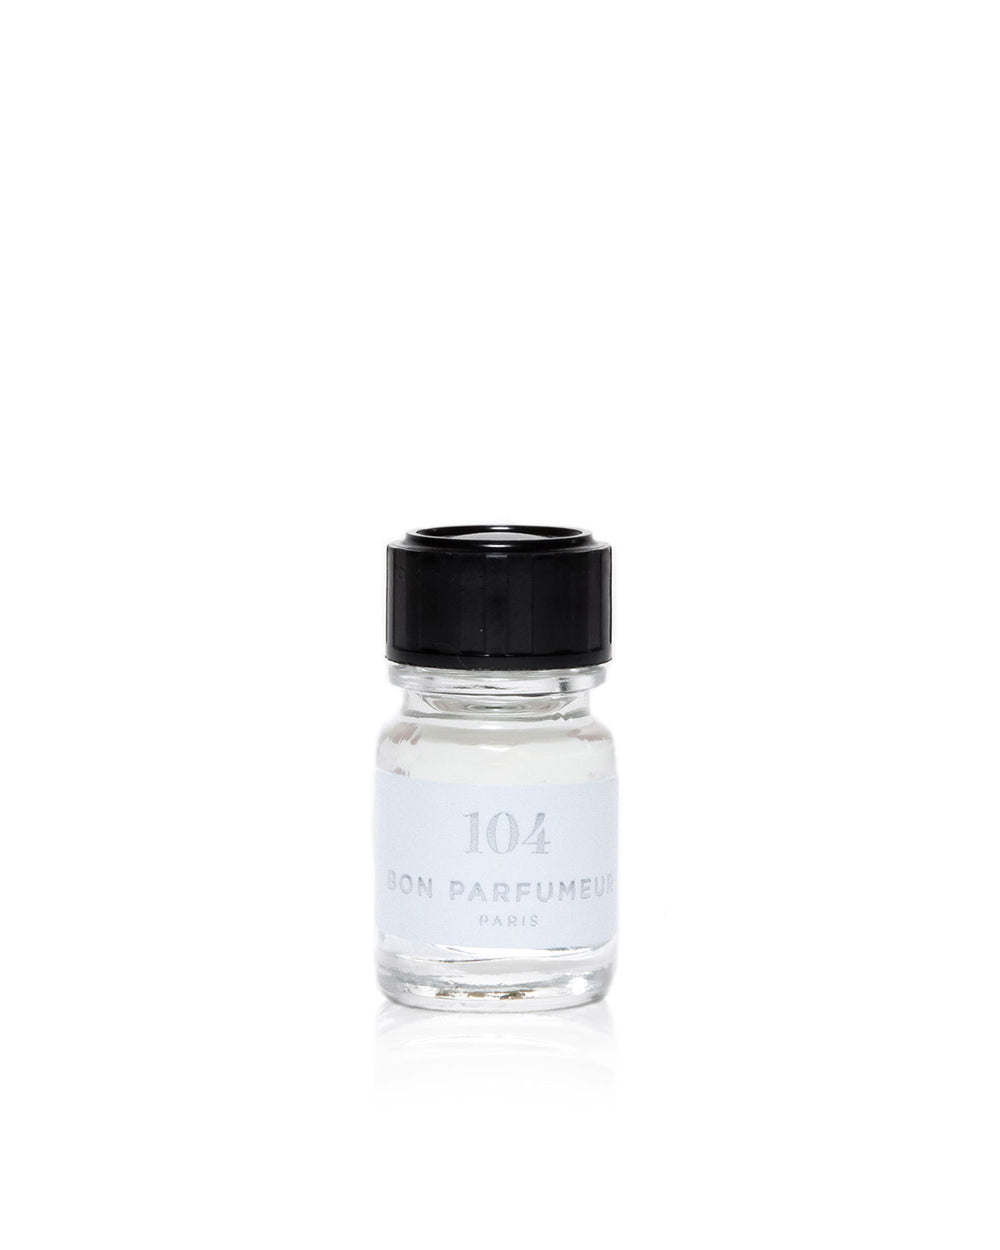 Bon Parfumeur 104 sample